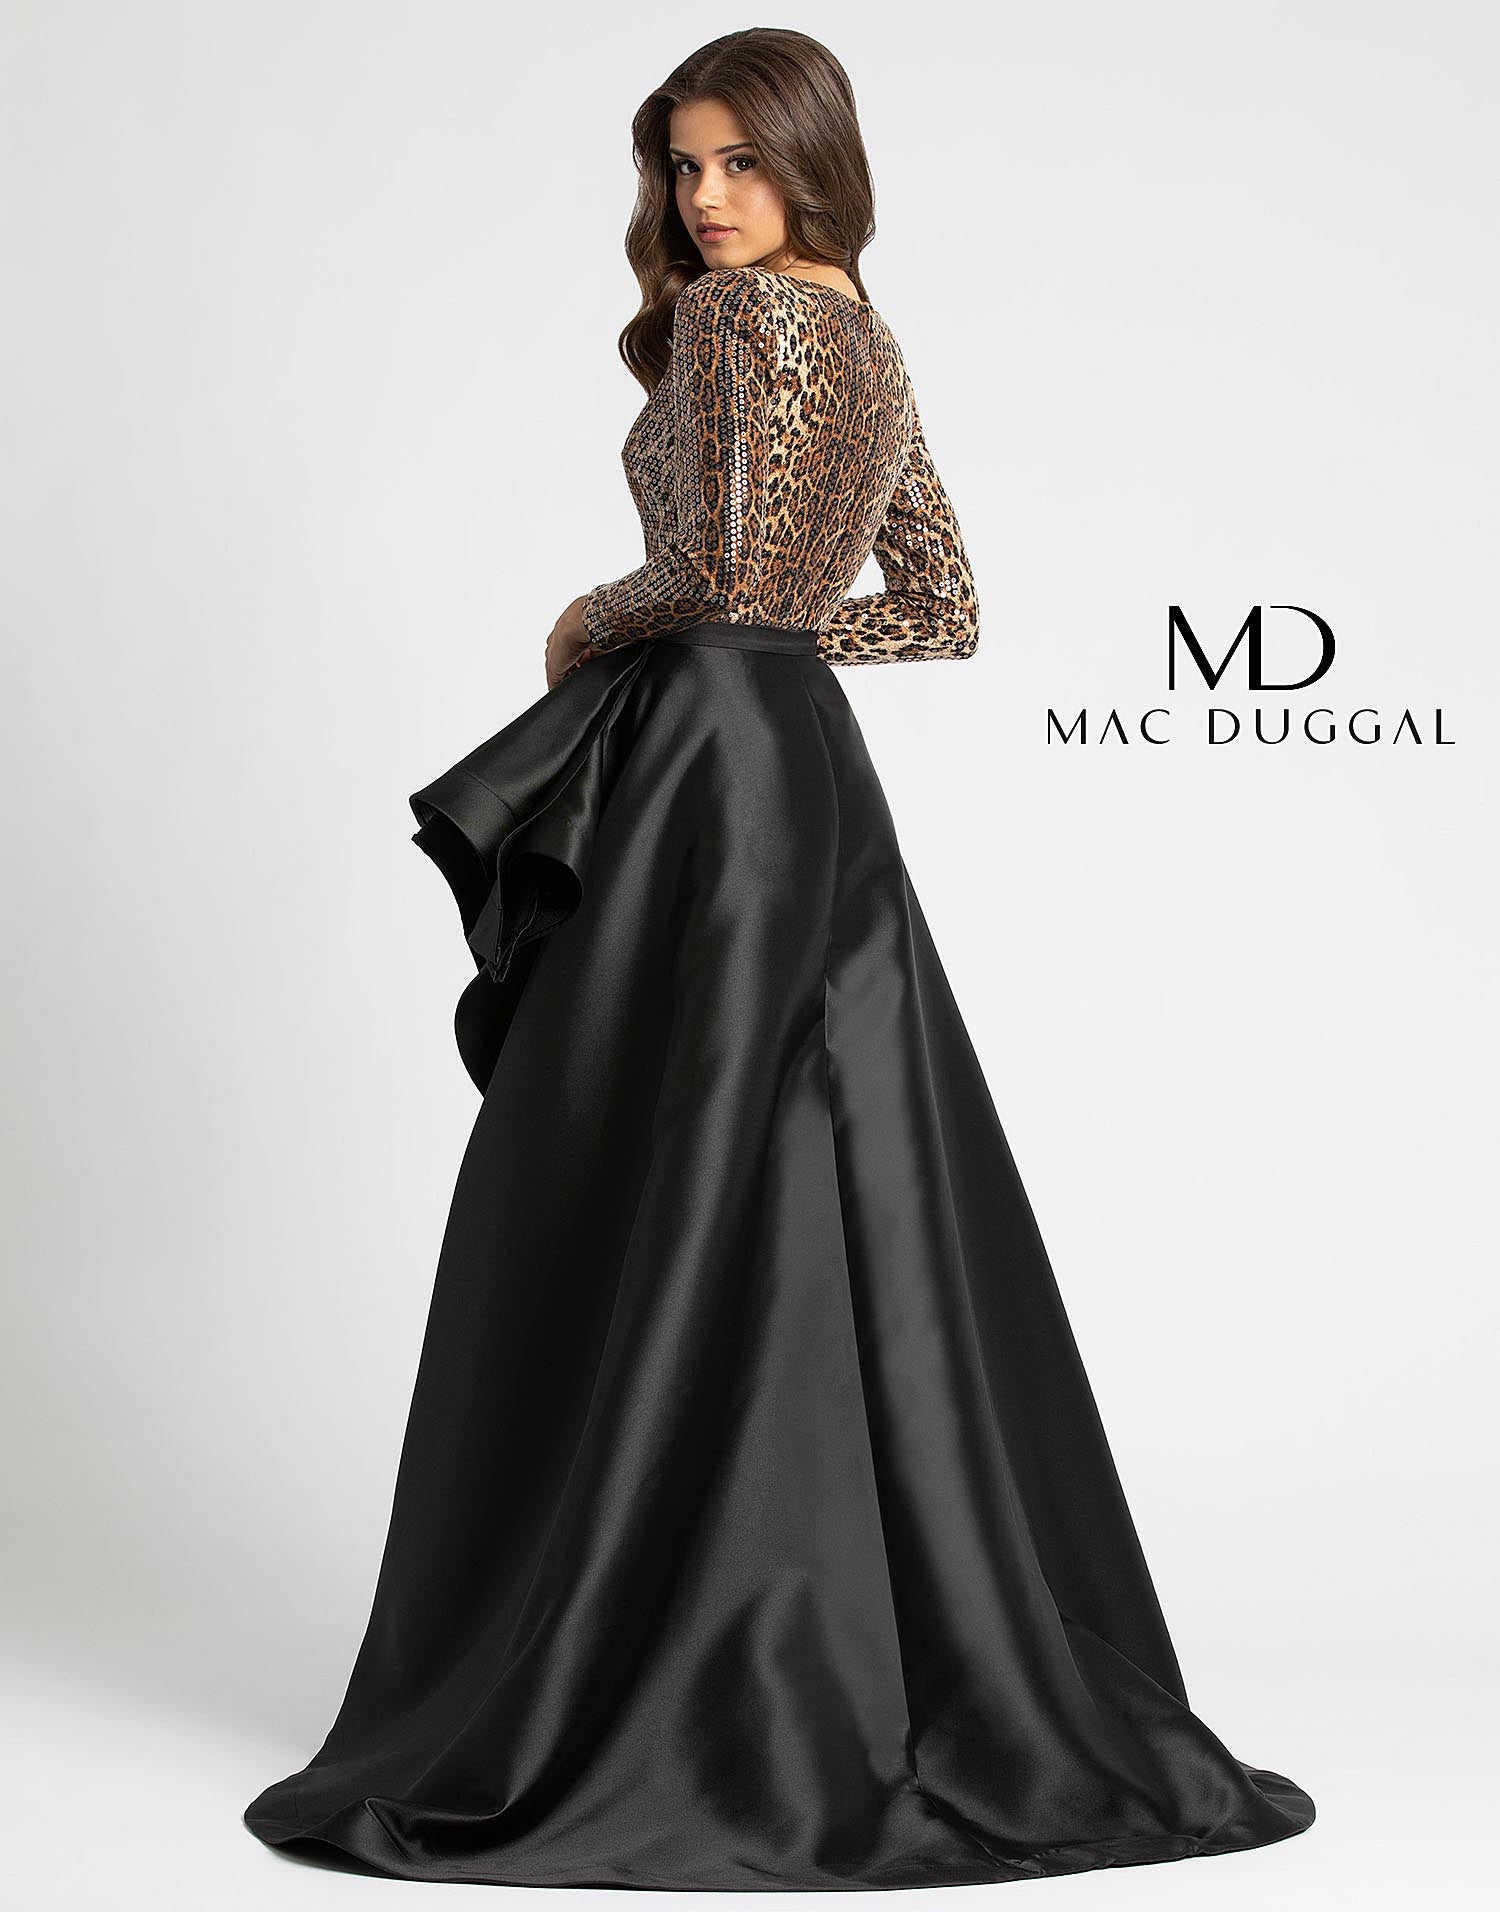 Mac Duggal #67369 Cheetah Jumpsuit with Detachable Skirt